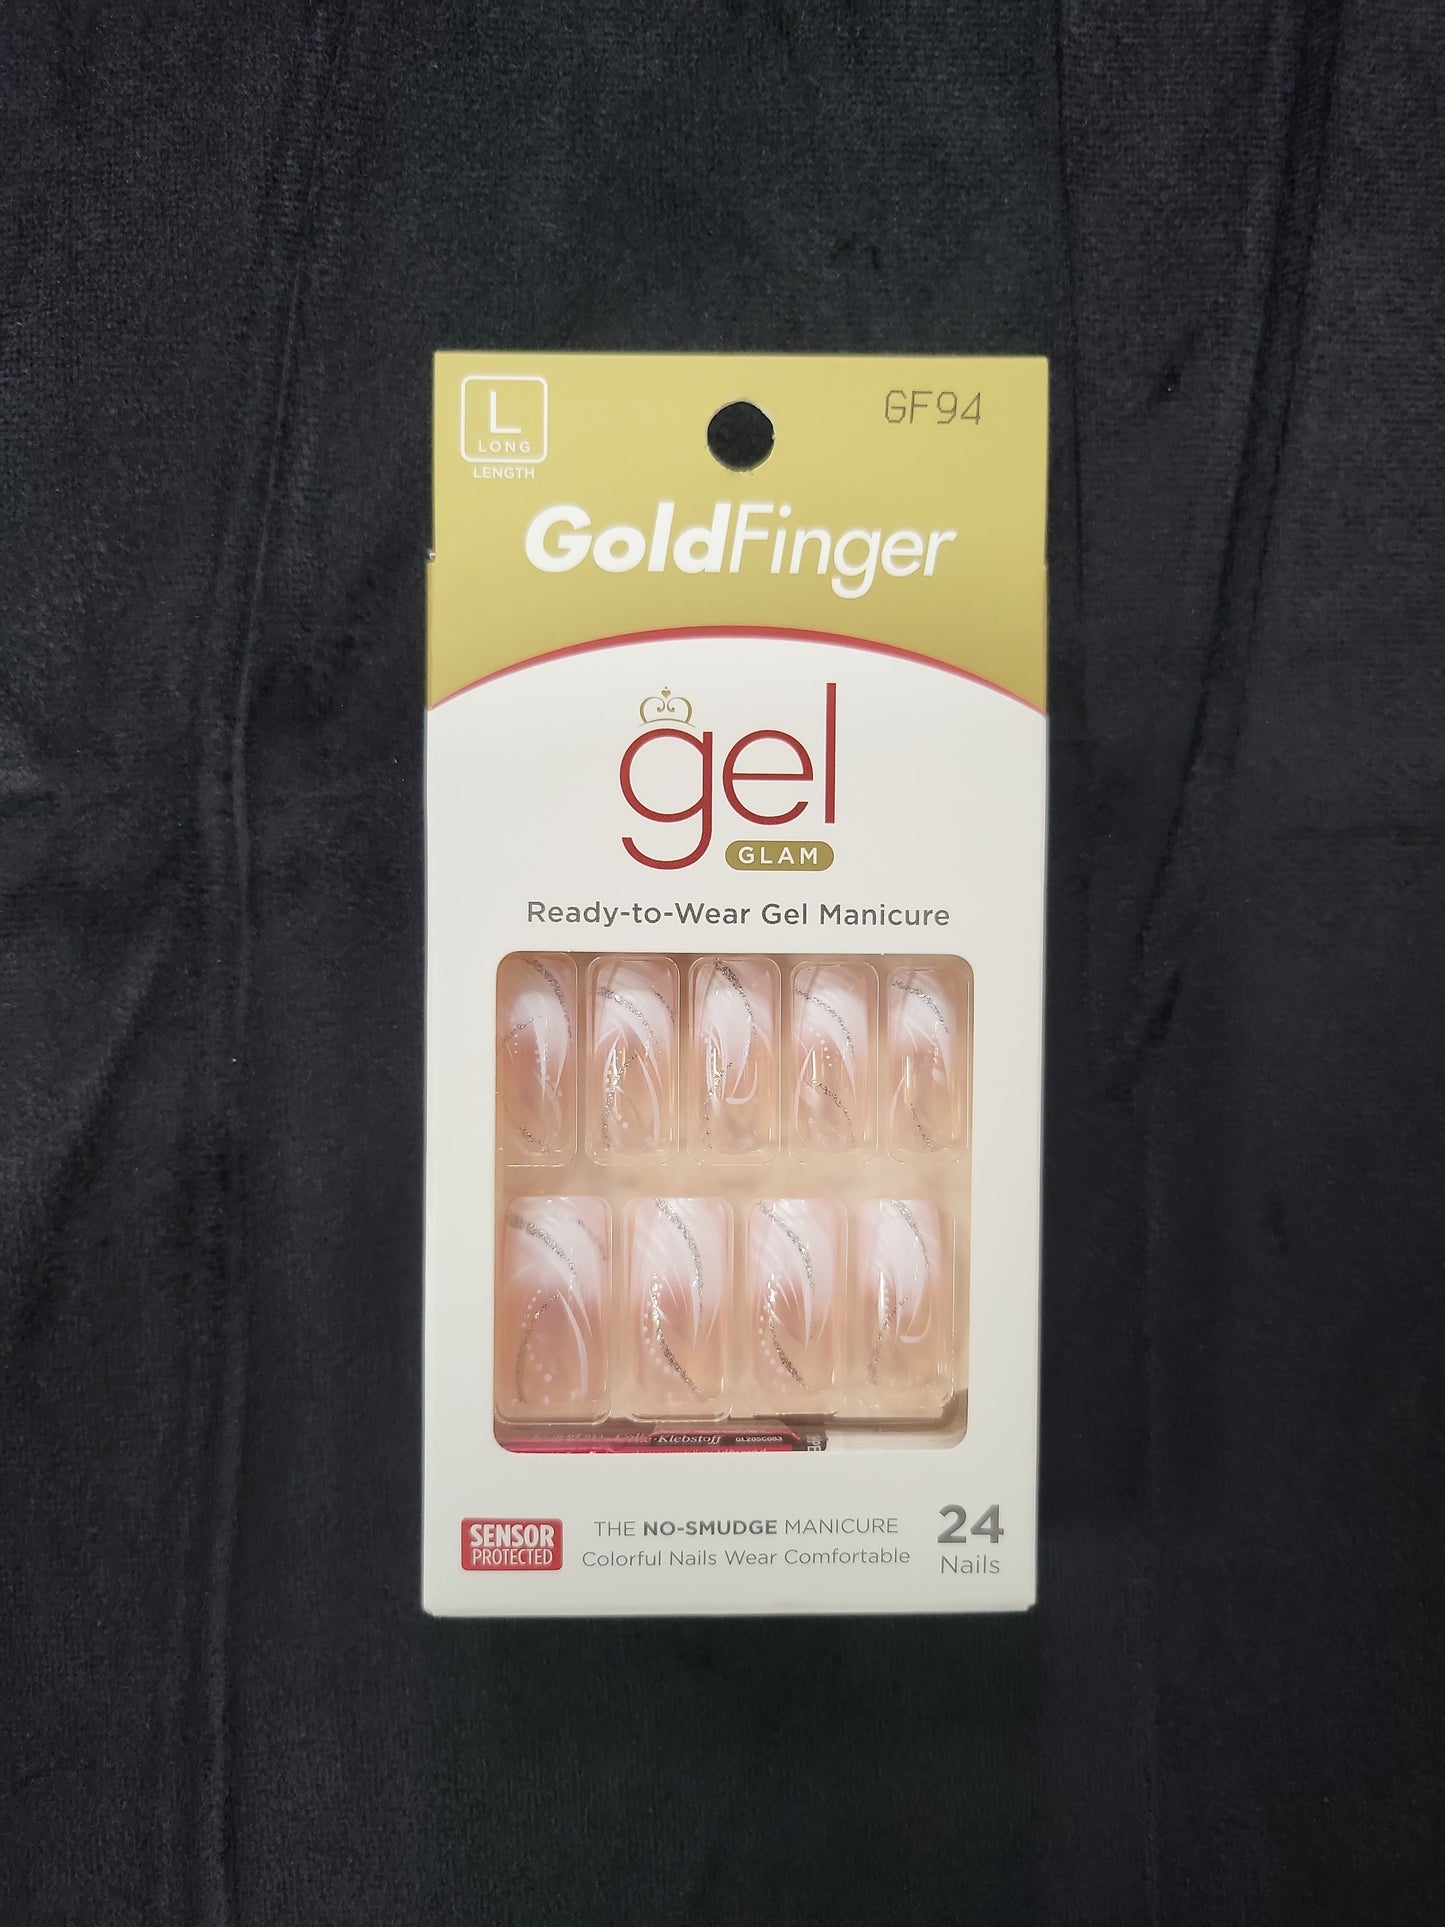 GoldFinger Gel Glam GF94